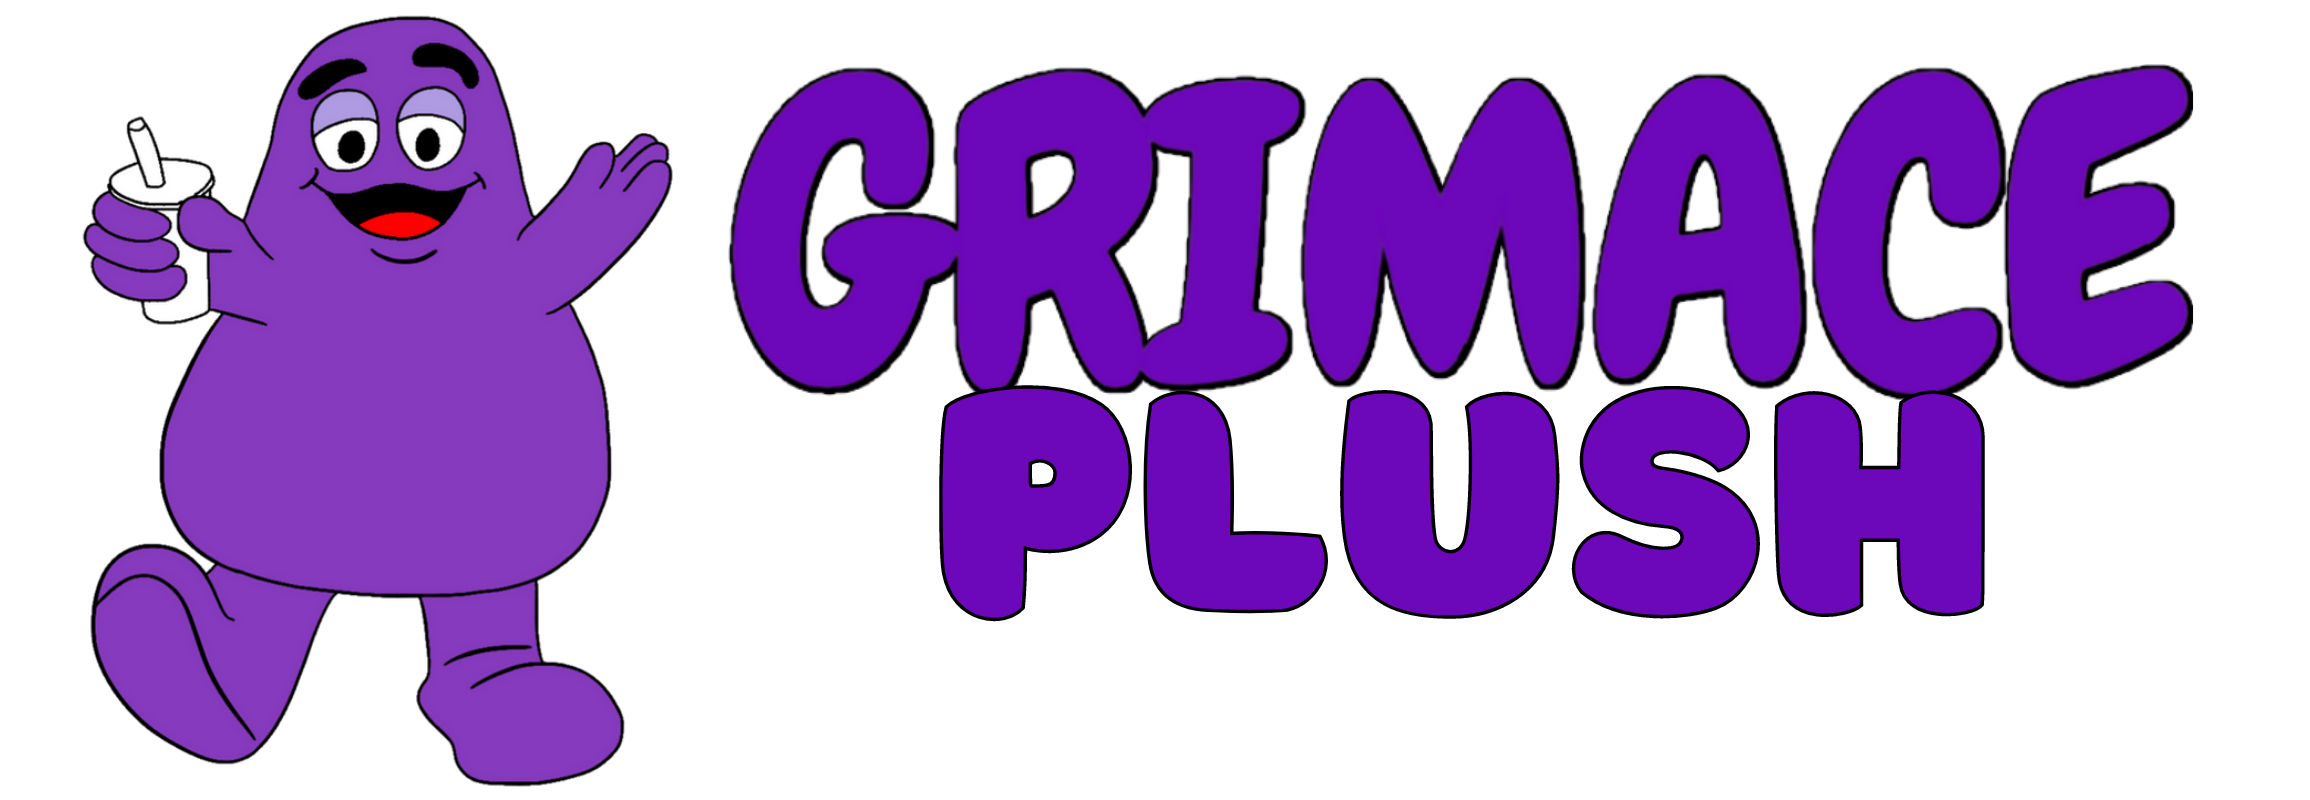 grimace plush logo - Grimace Plush